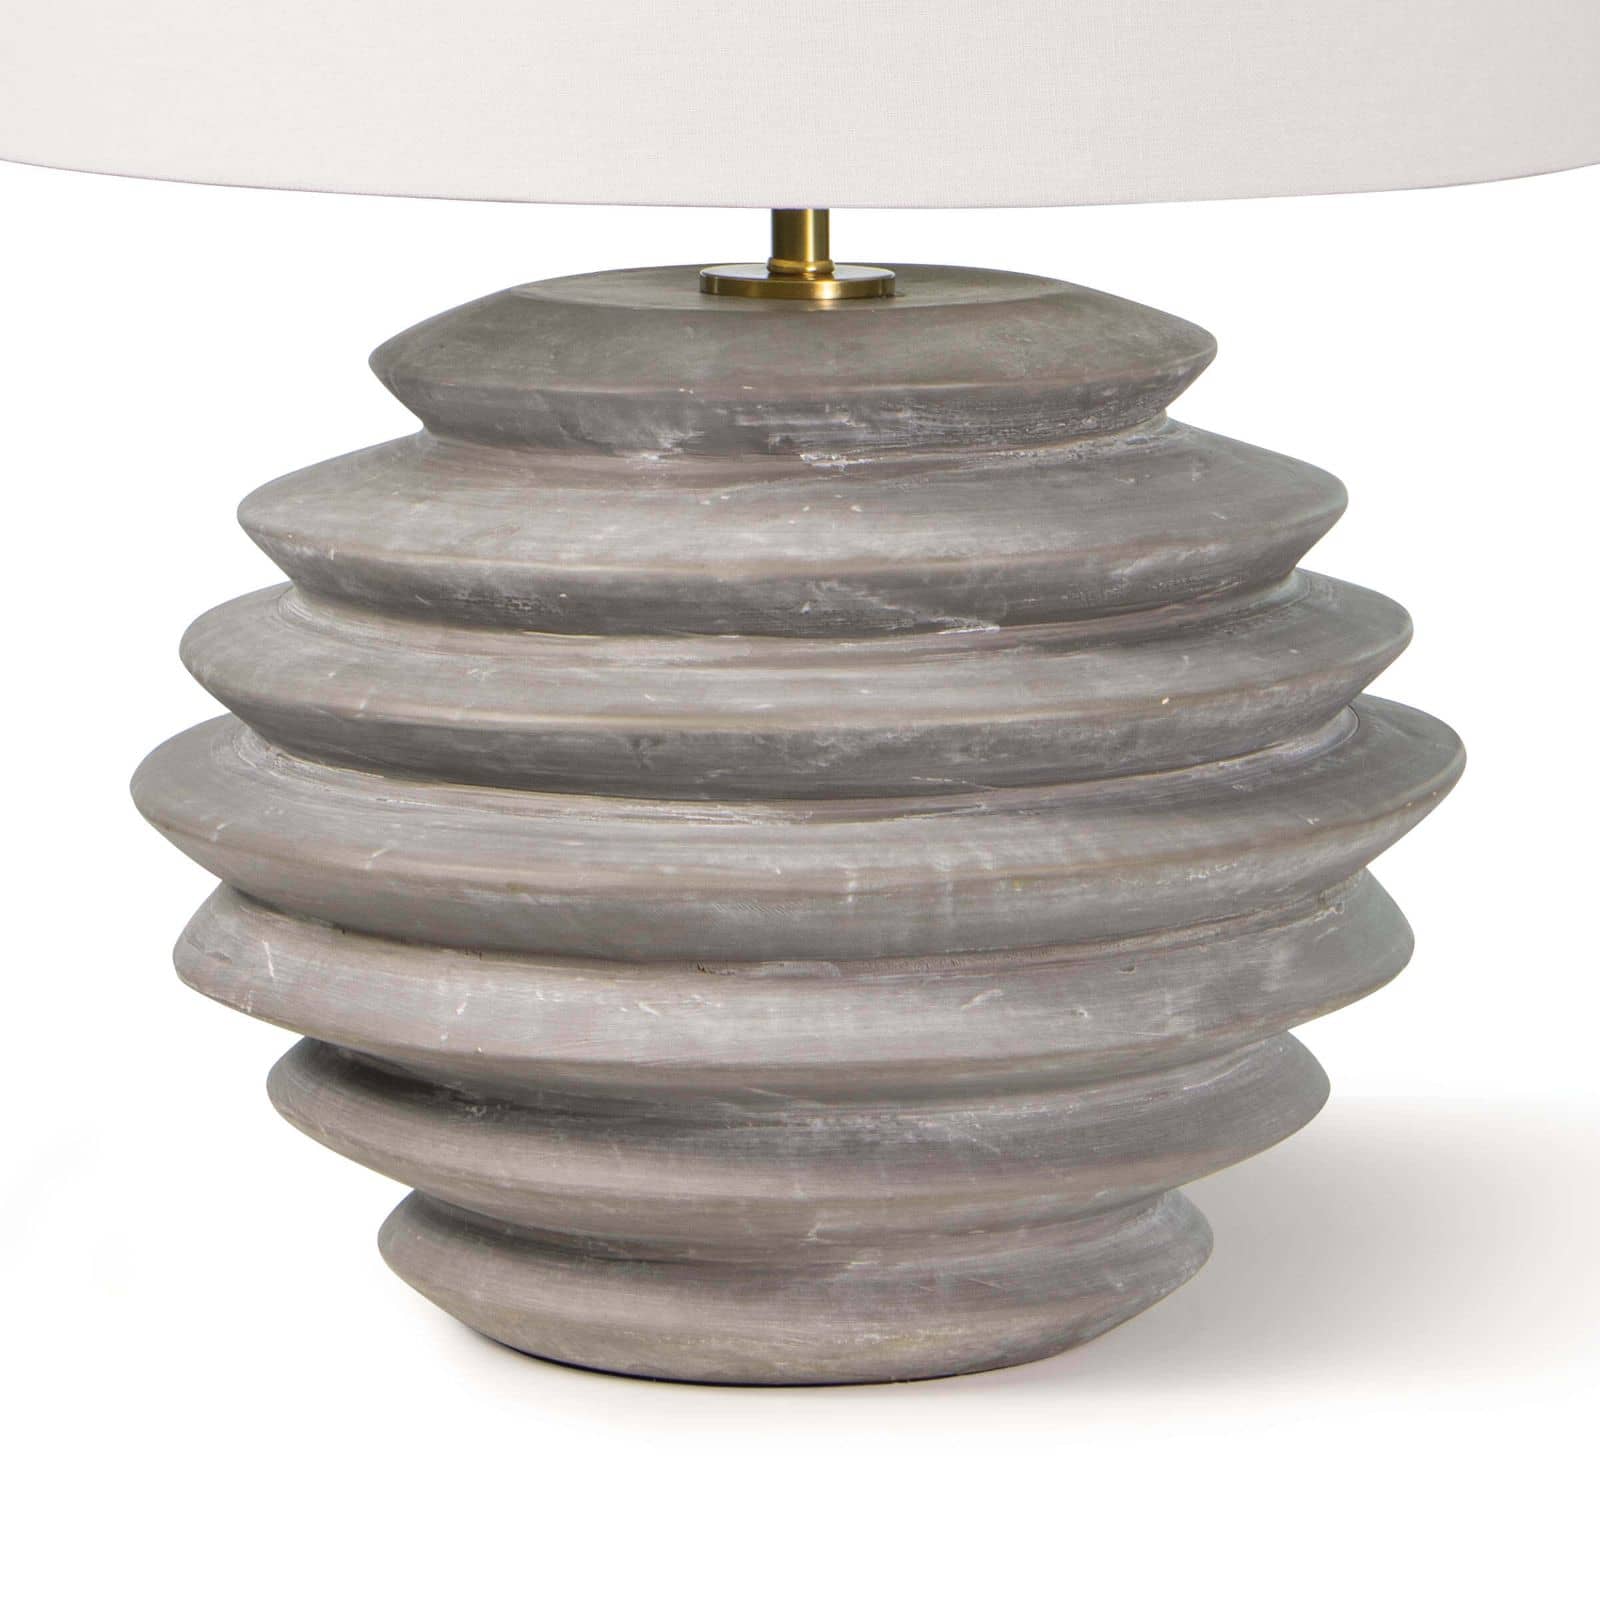 Regina Andrew Canyon Ceramic Table Lamp